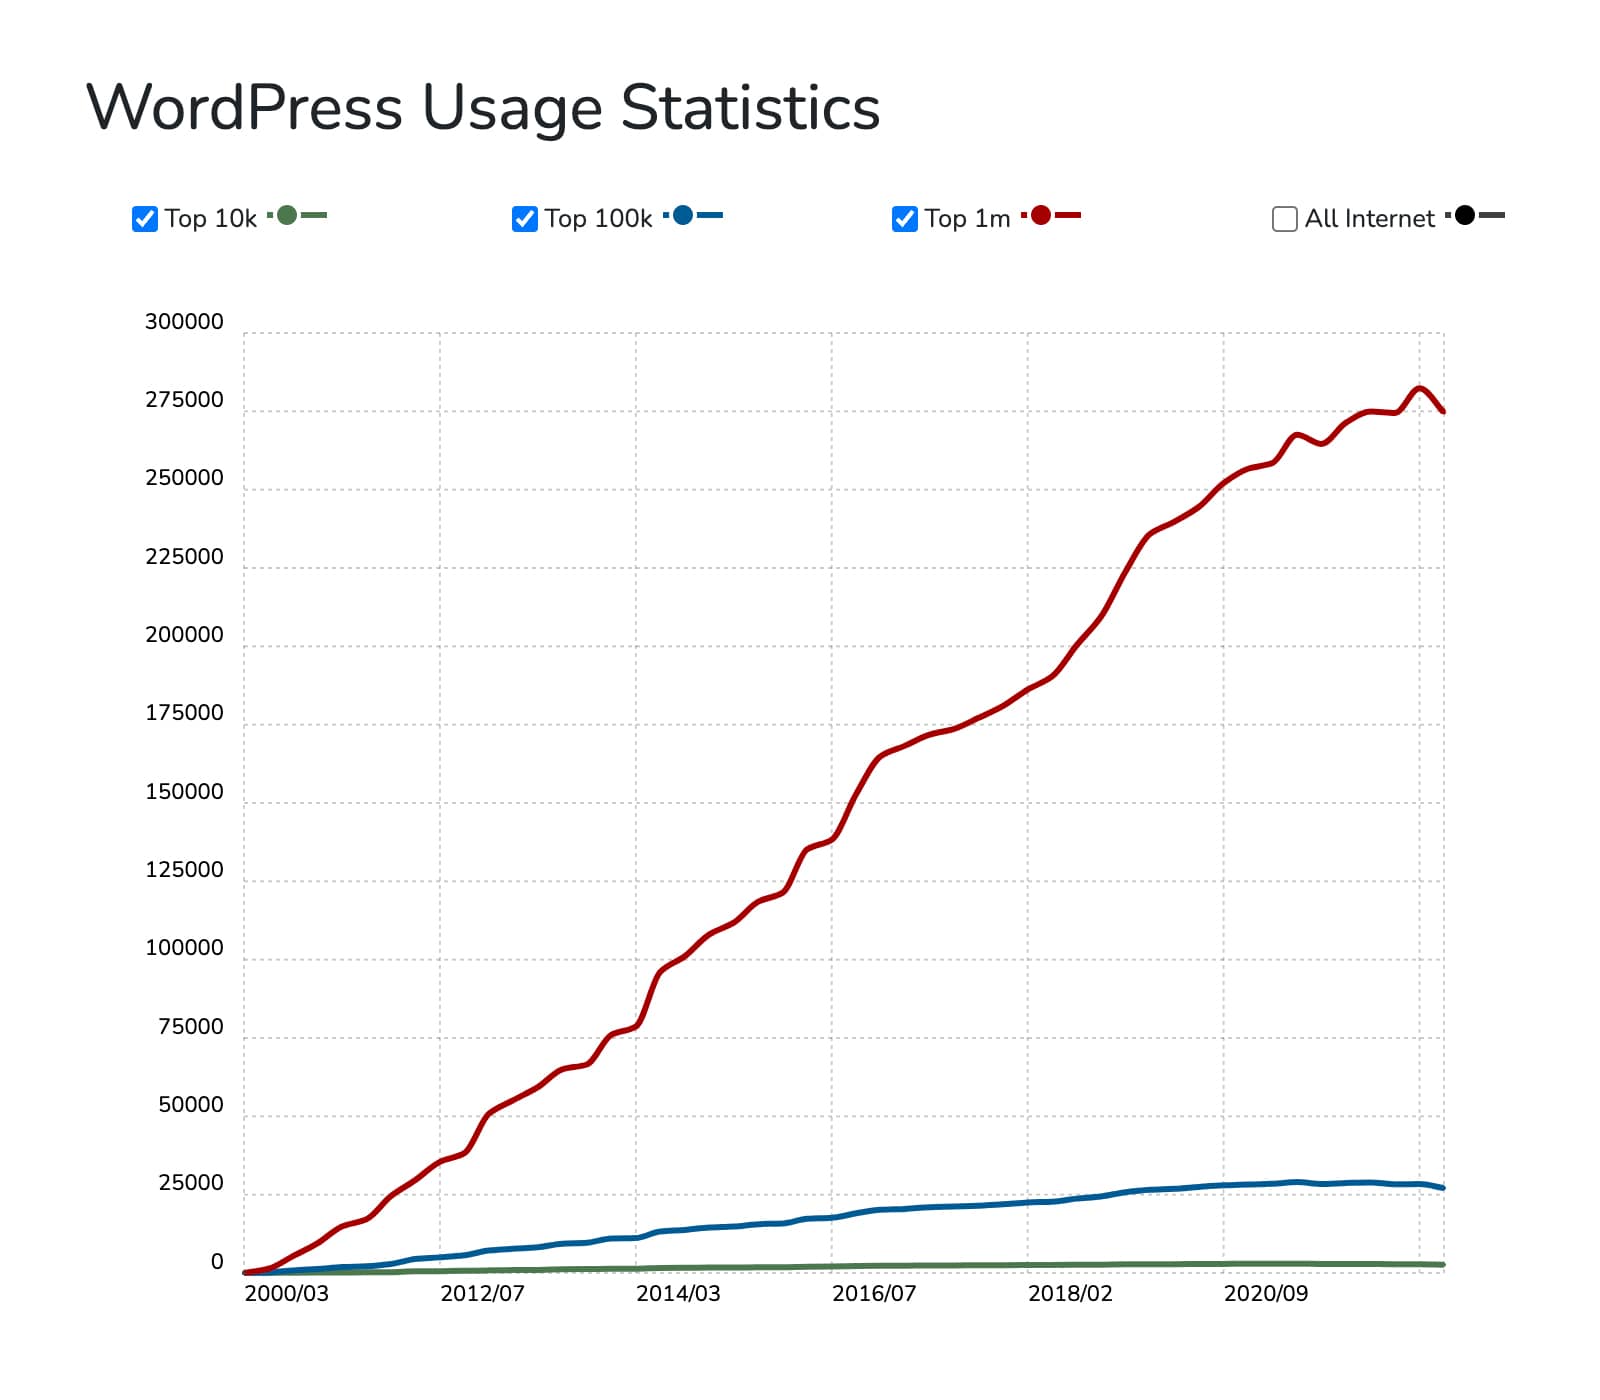 WordPress Usage Growth